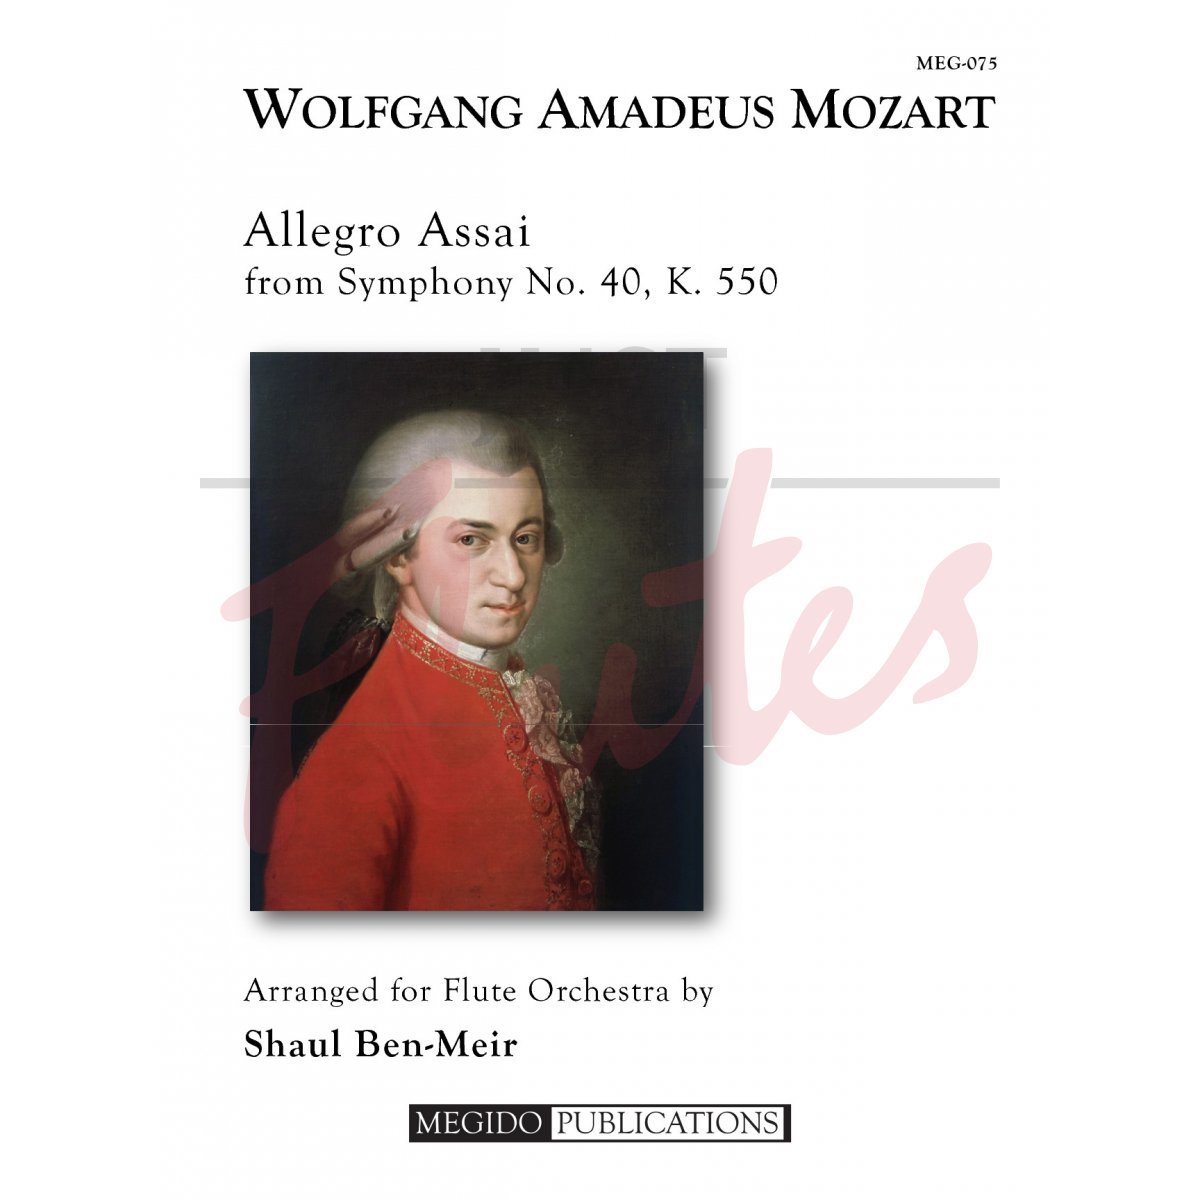 Allegro Assai from Symphony No. 40